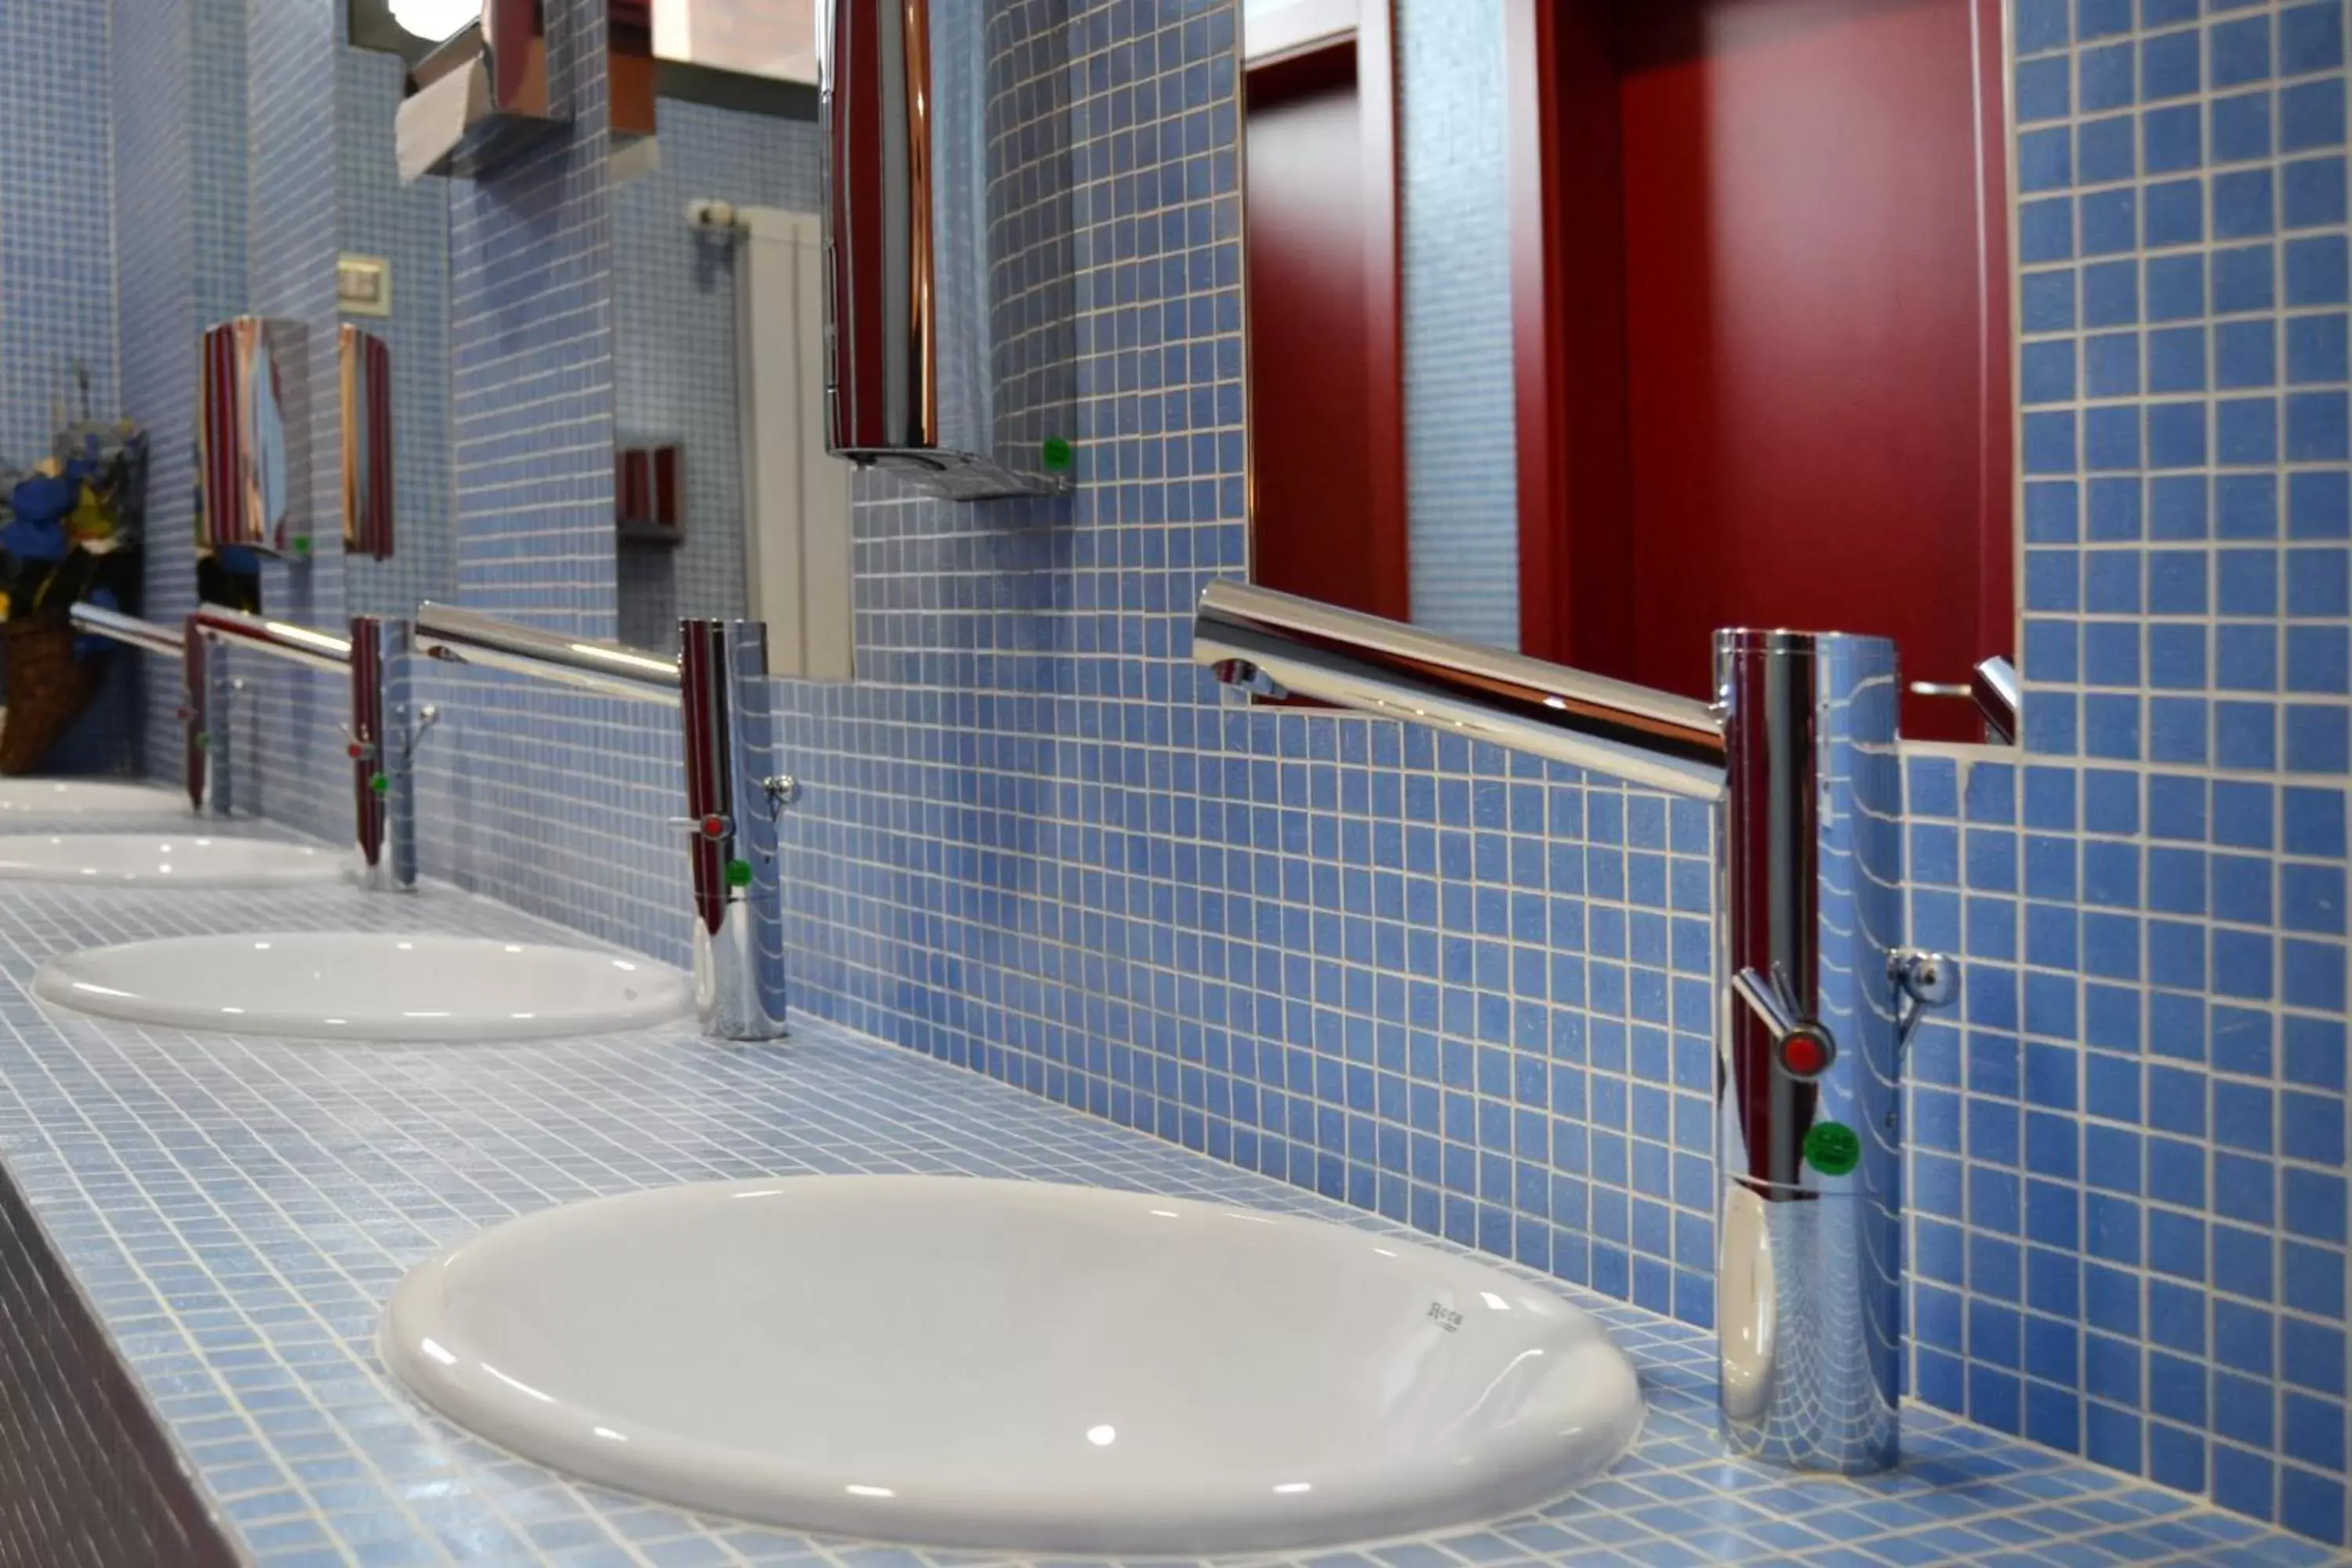 Bathroom in don guglielmo panoramic Hotel & Spa